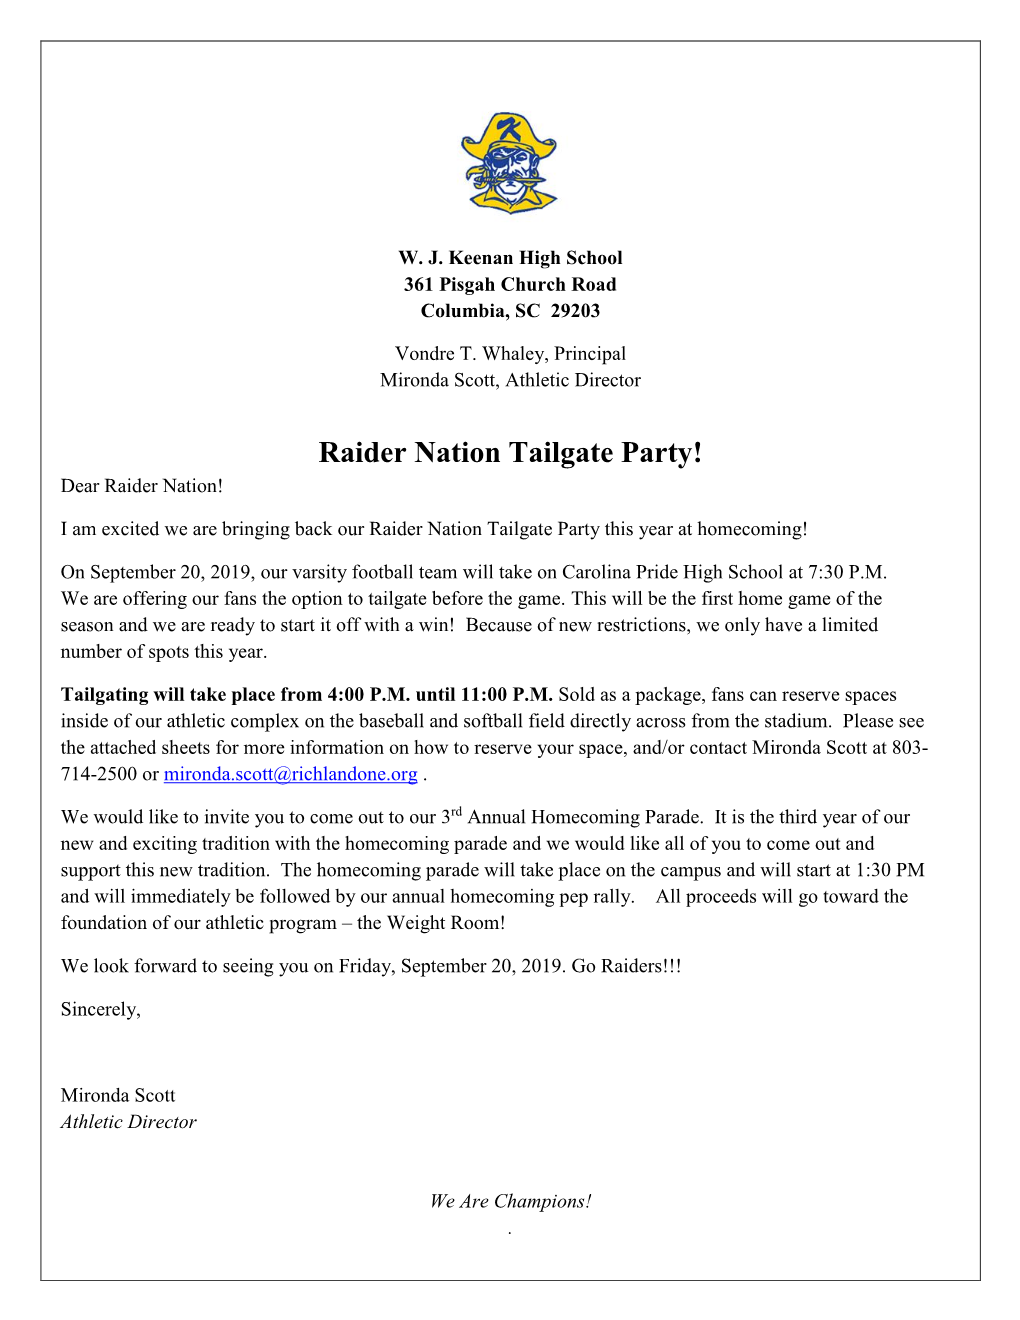 Raider Nation Tailgate Party! Dear Raider Nation!